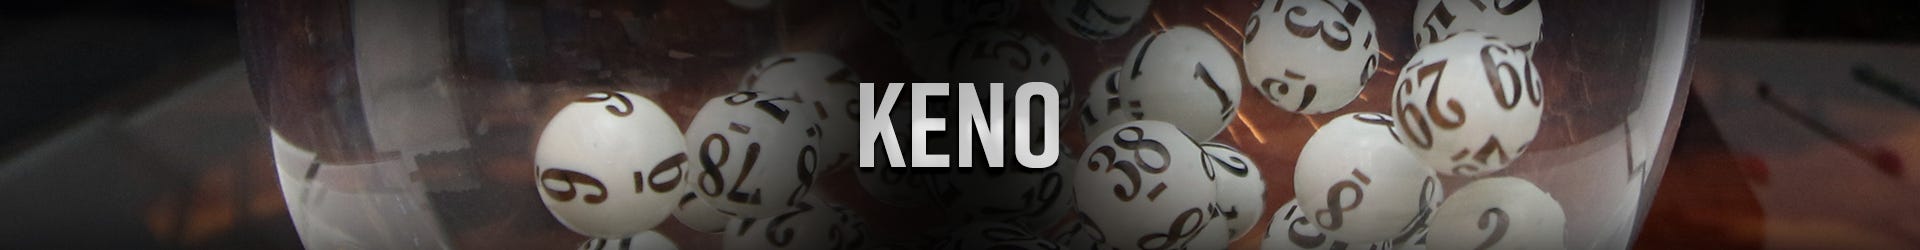 Club keno extra payout winning